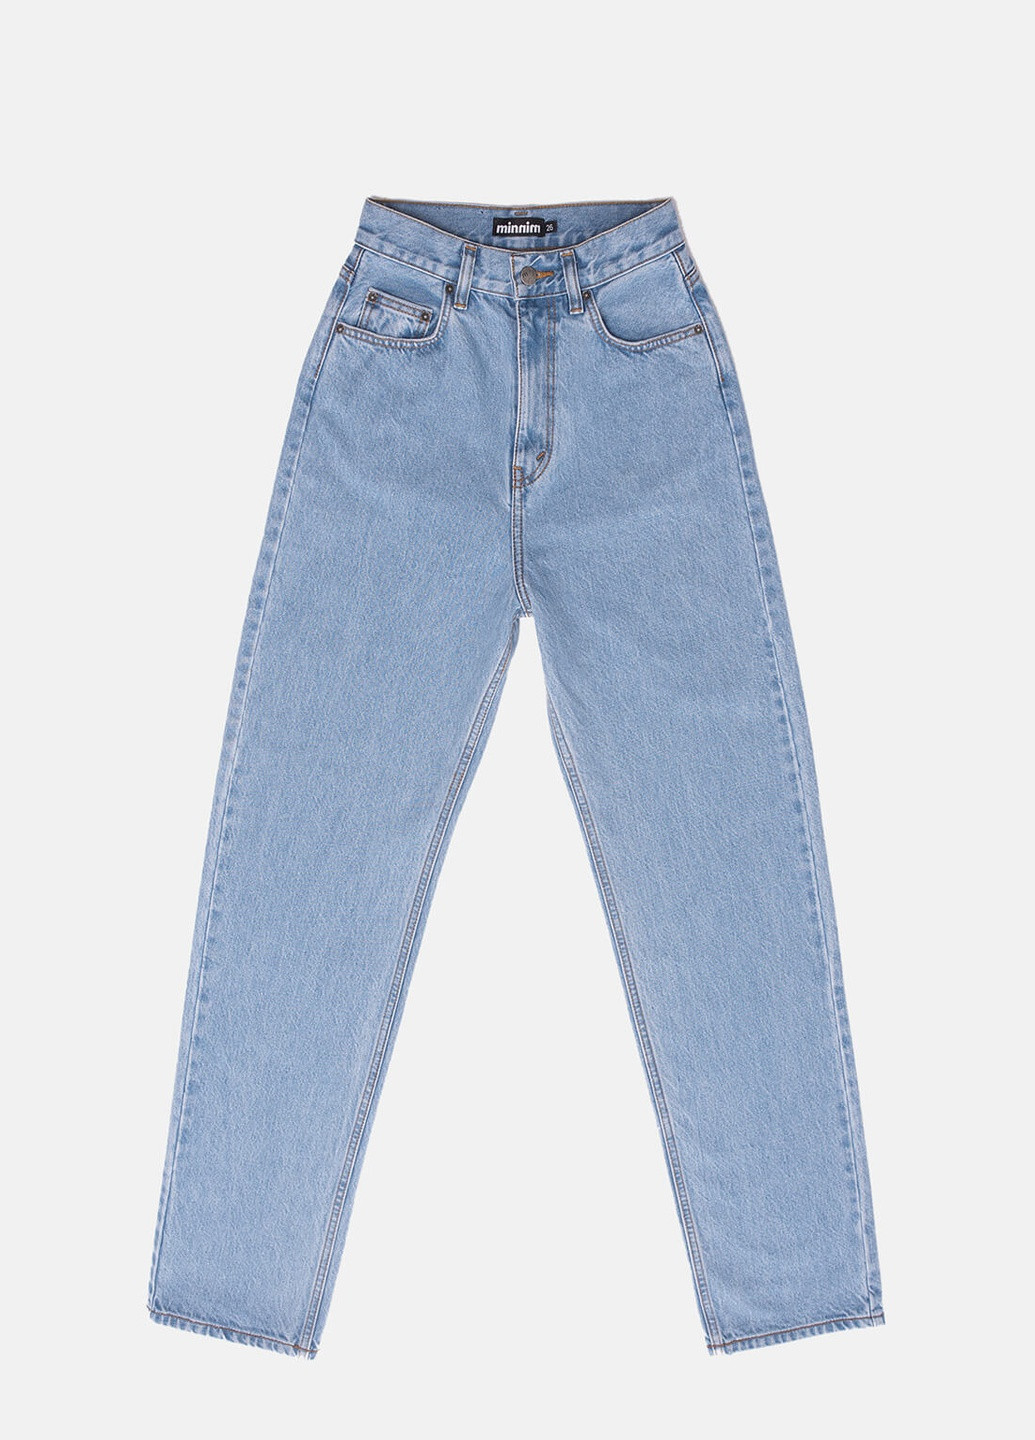 Голубые демисезонные мешковатые джинсы женские light Straight Minnim